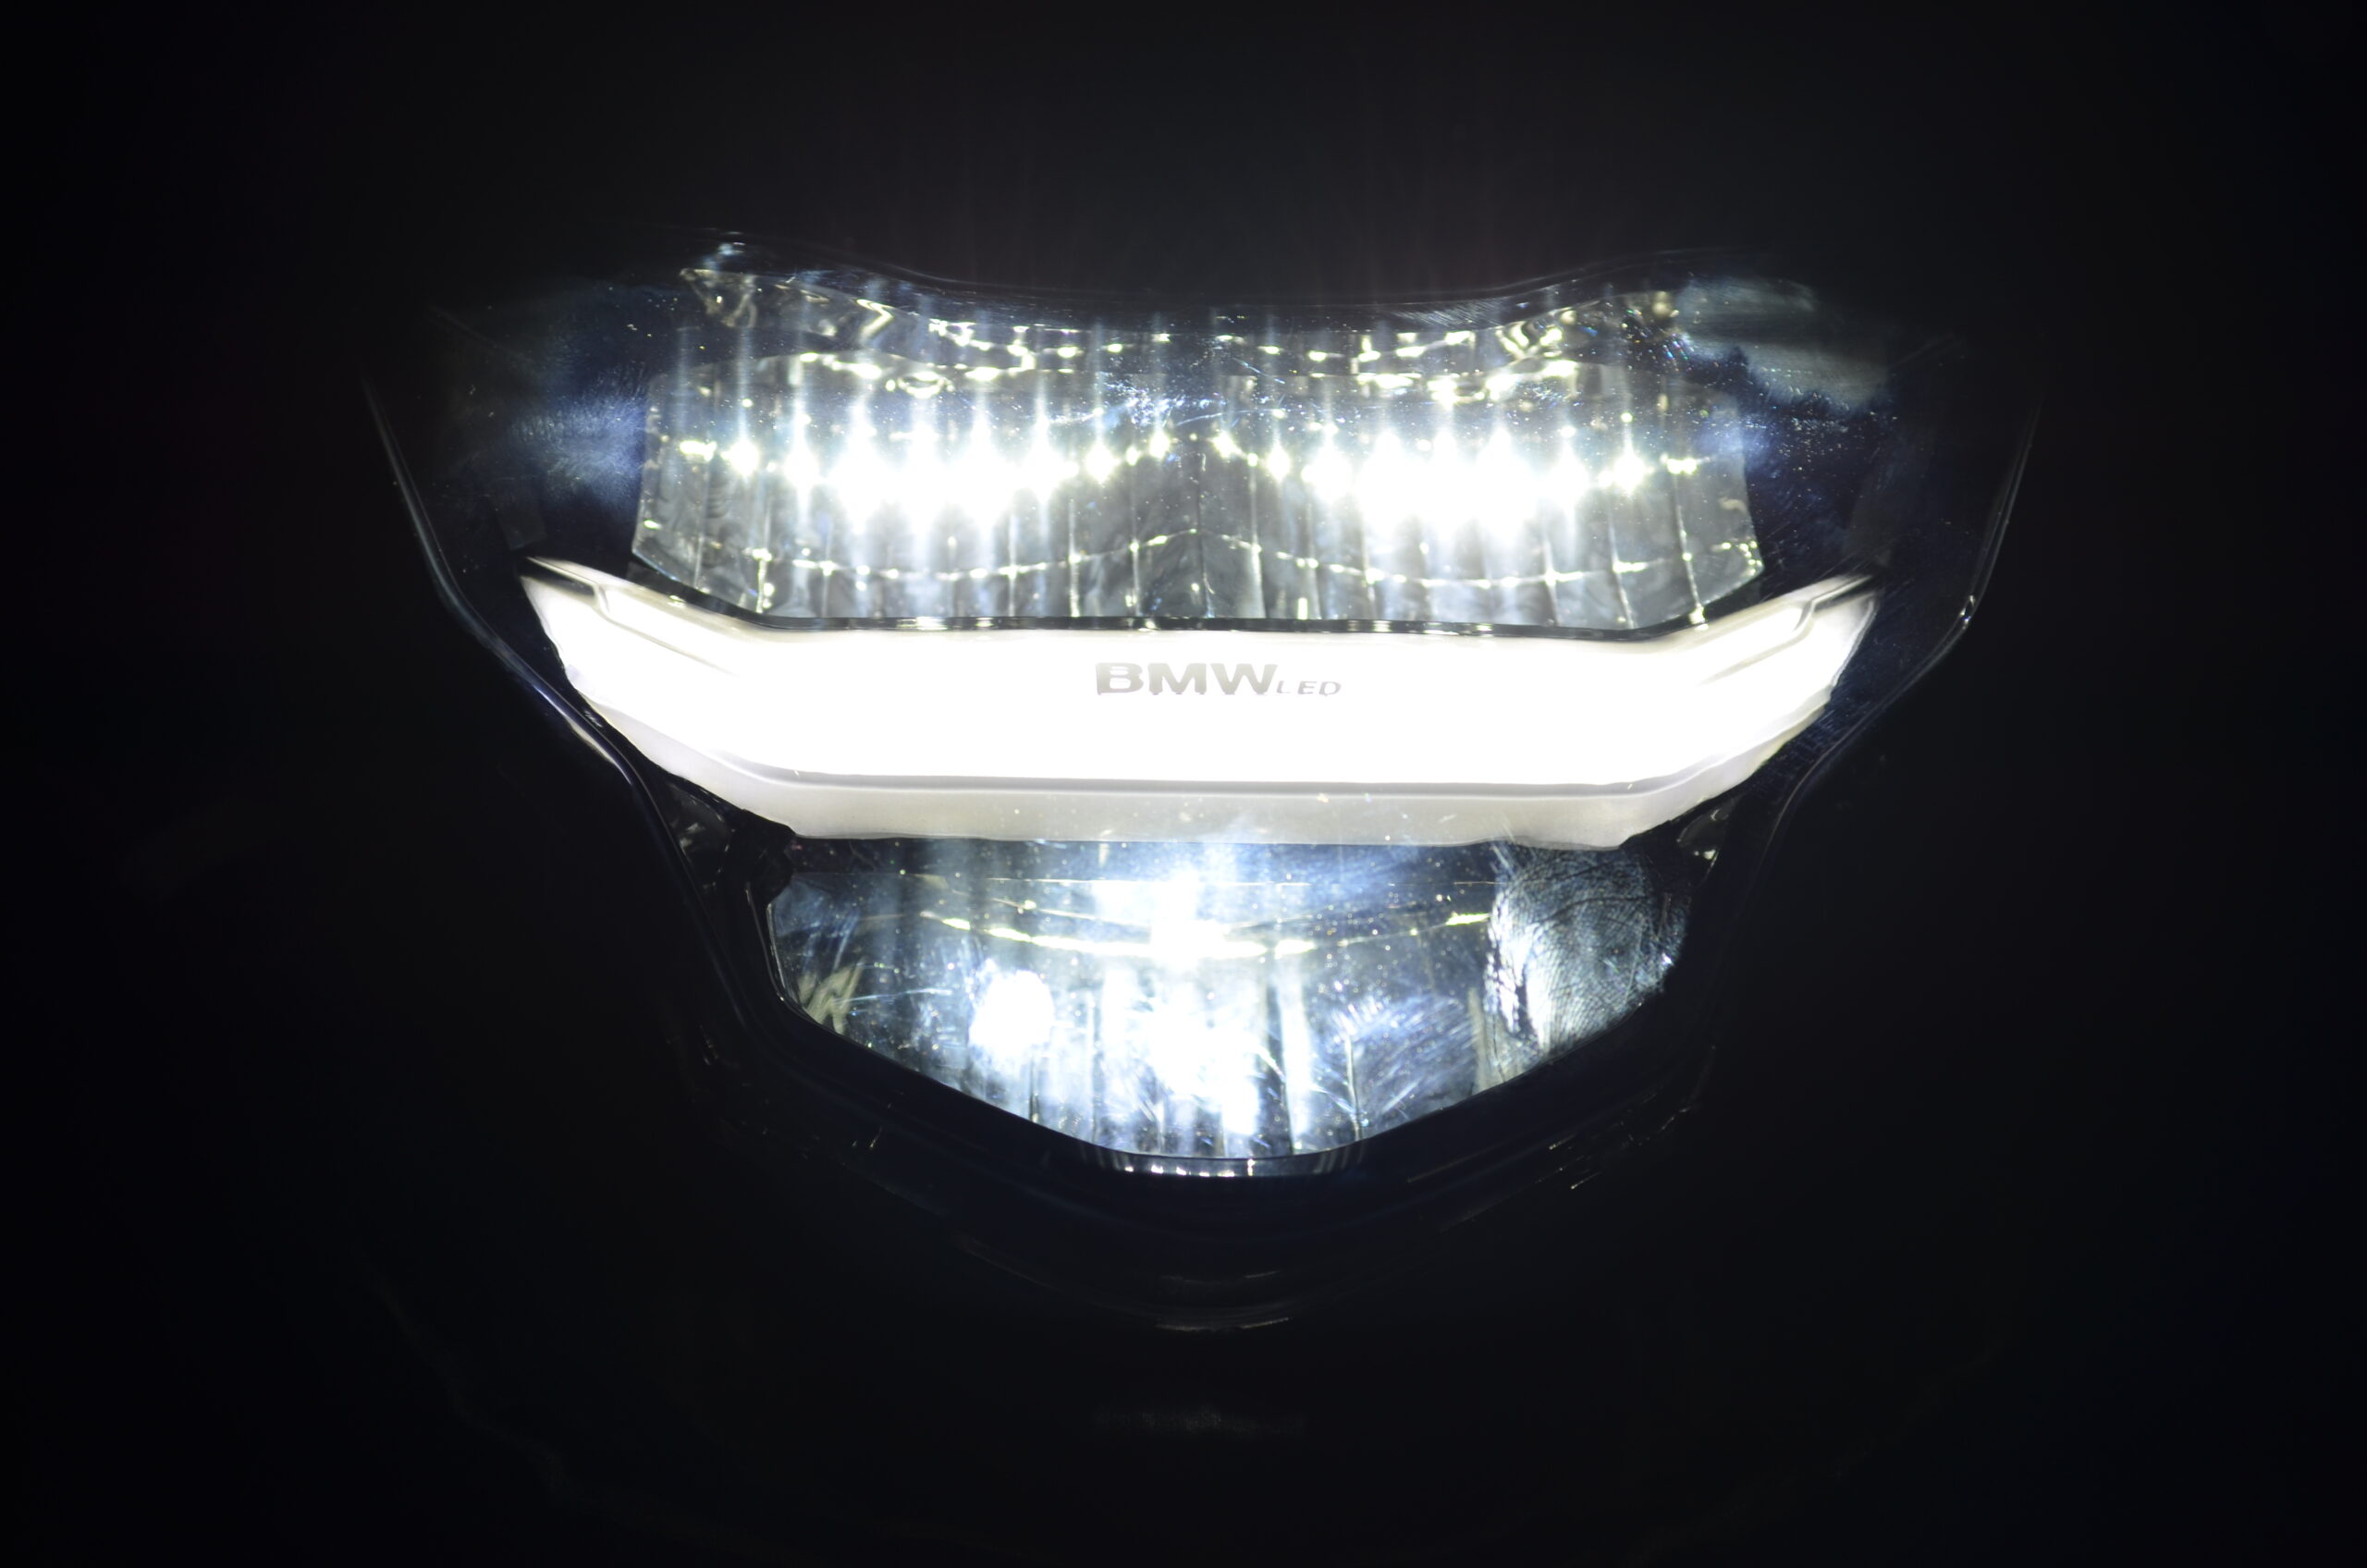 RINDER - BMW Head Lamp LED G 310 GS 2021 04